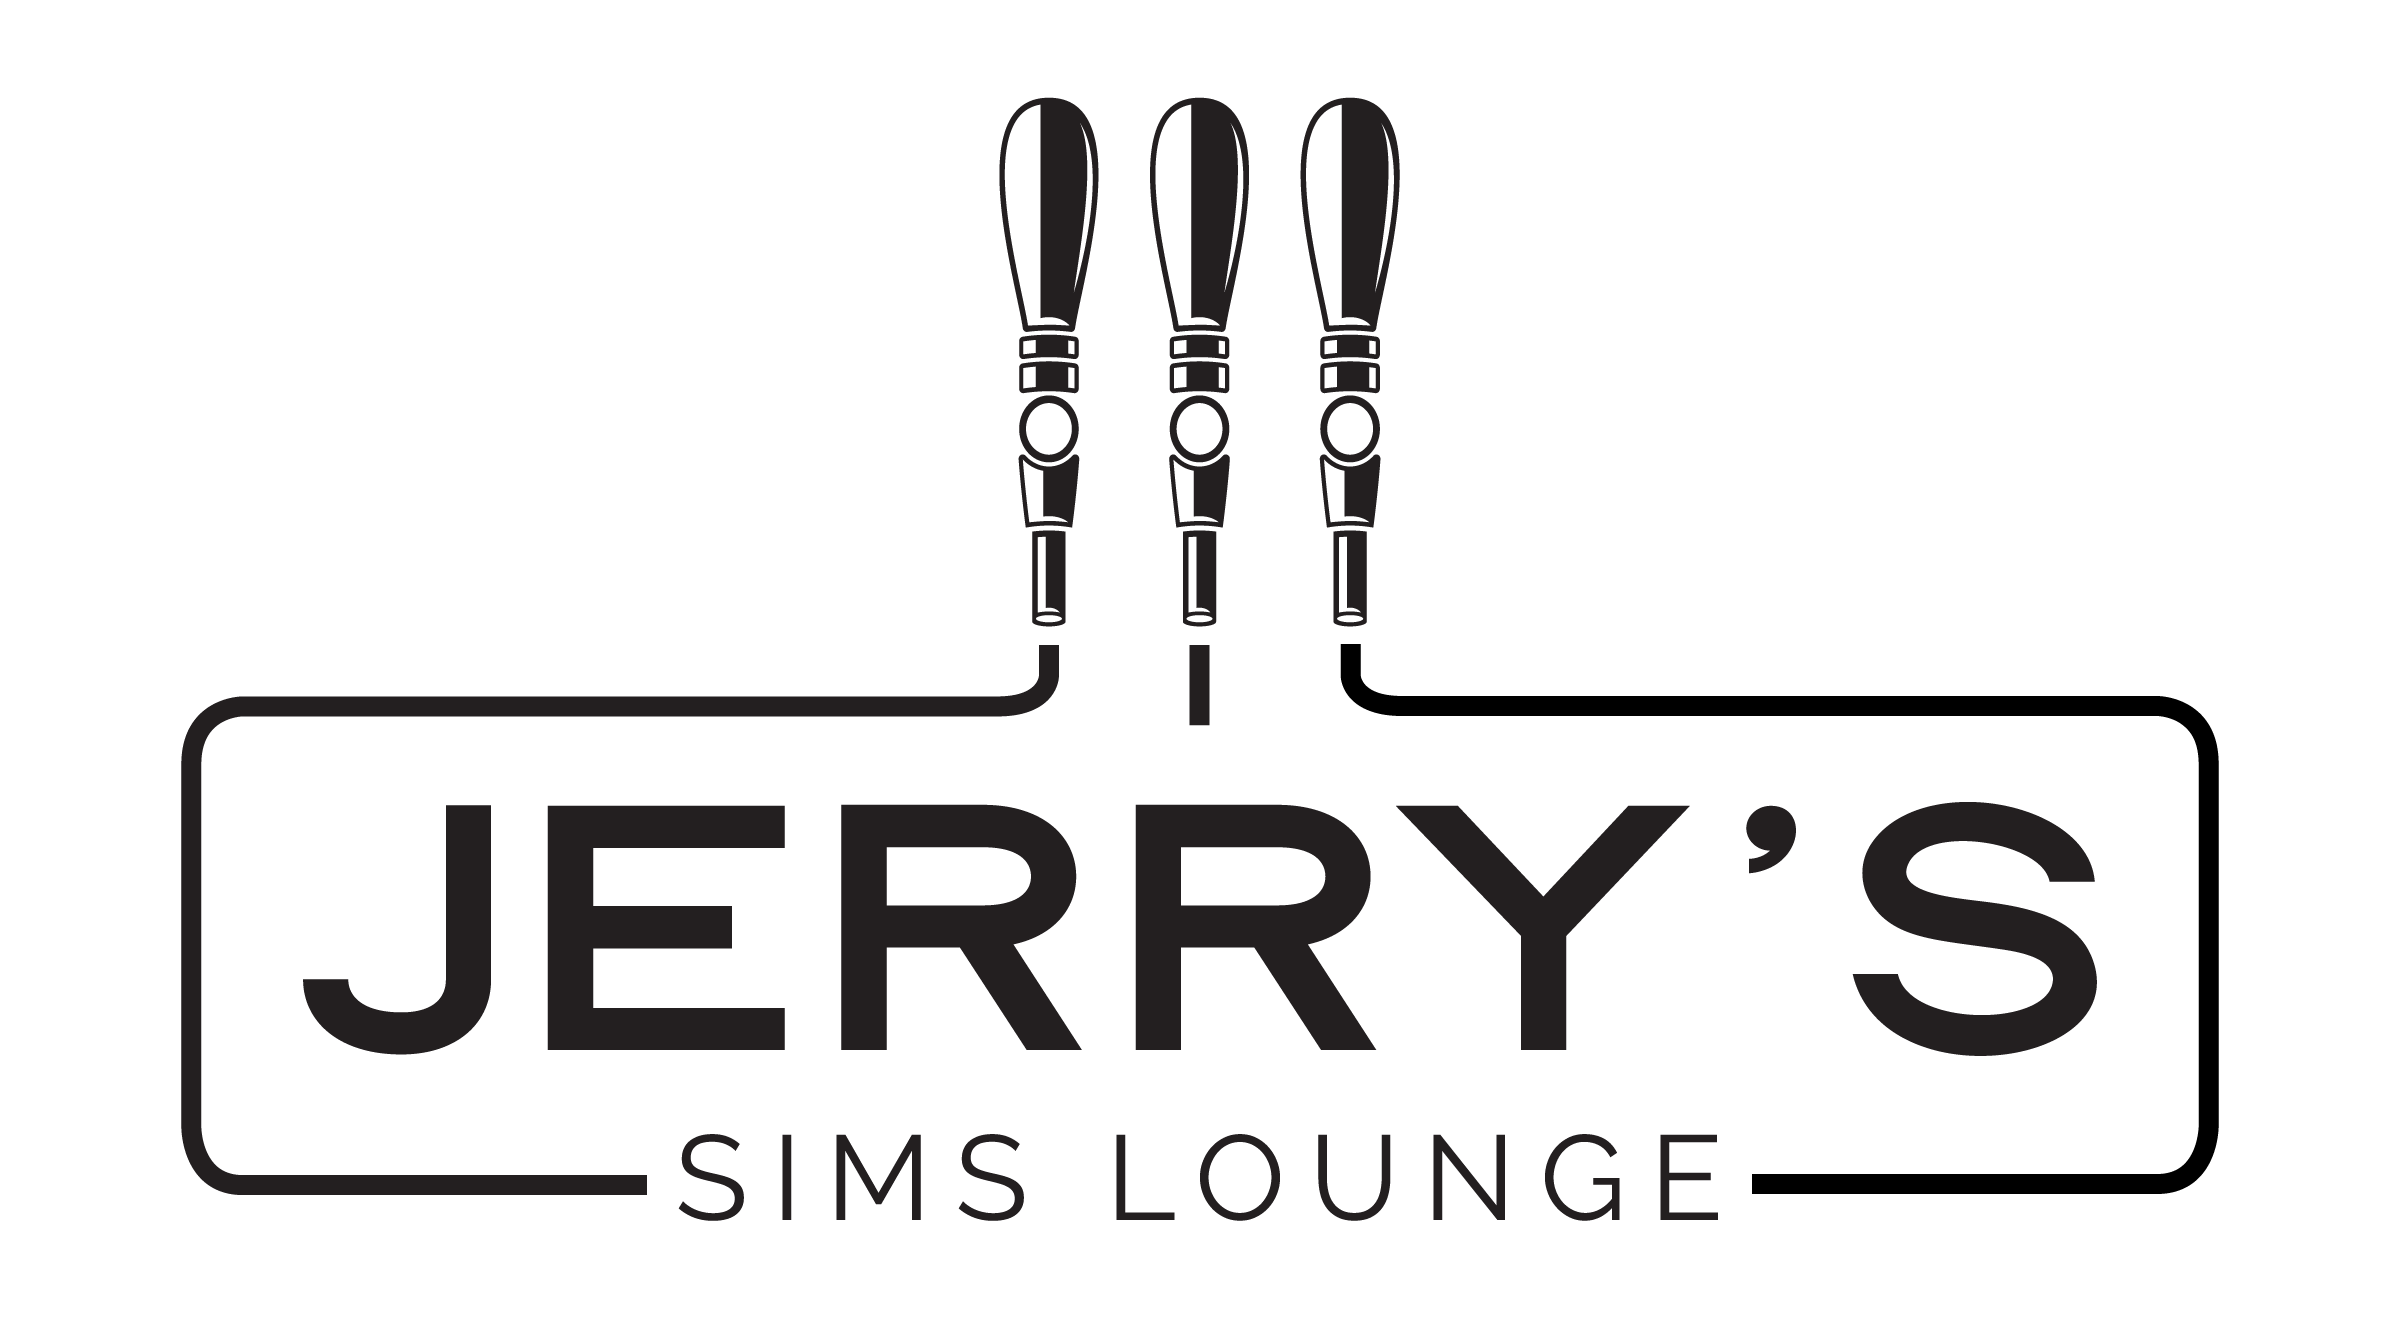 Jerrys sims lounge